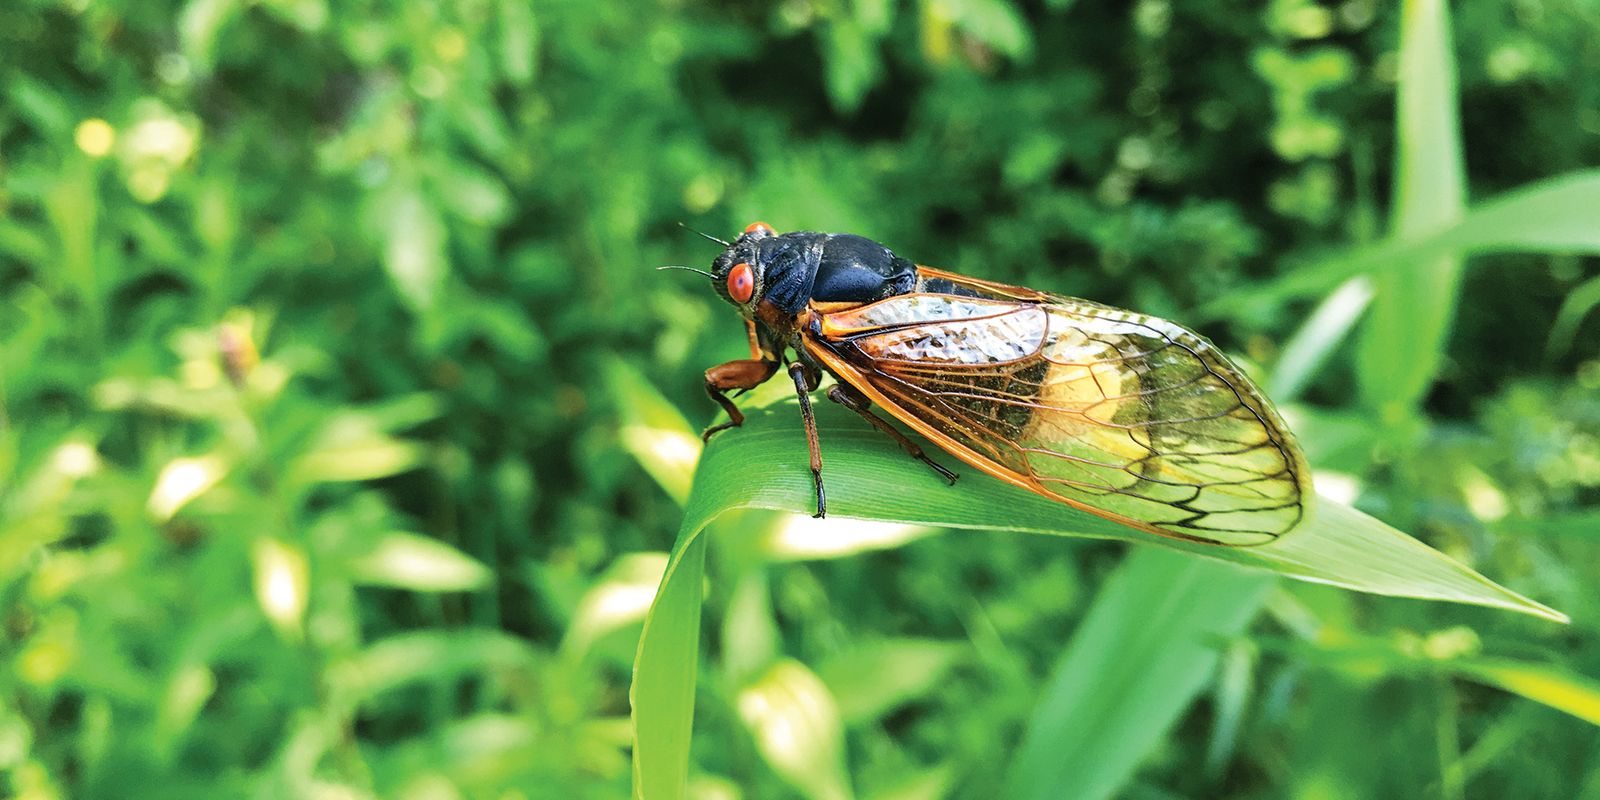 Cicada on a plant.